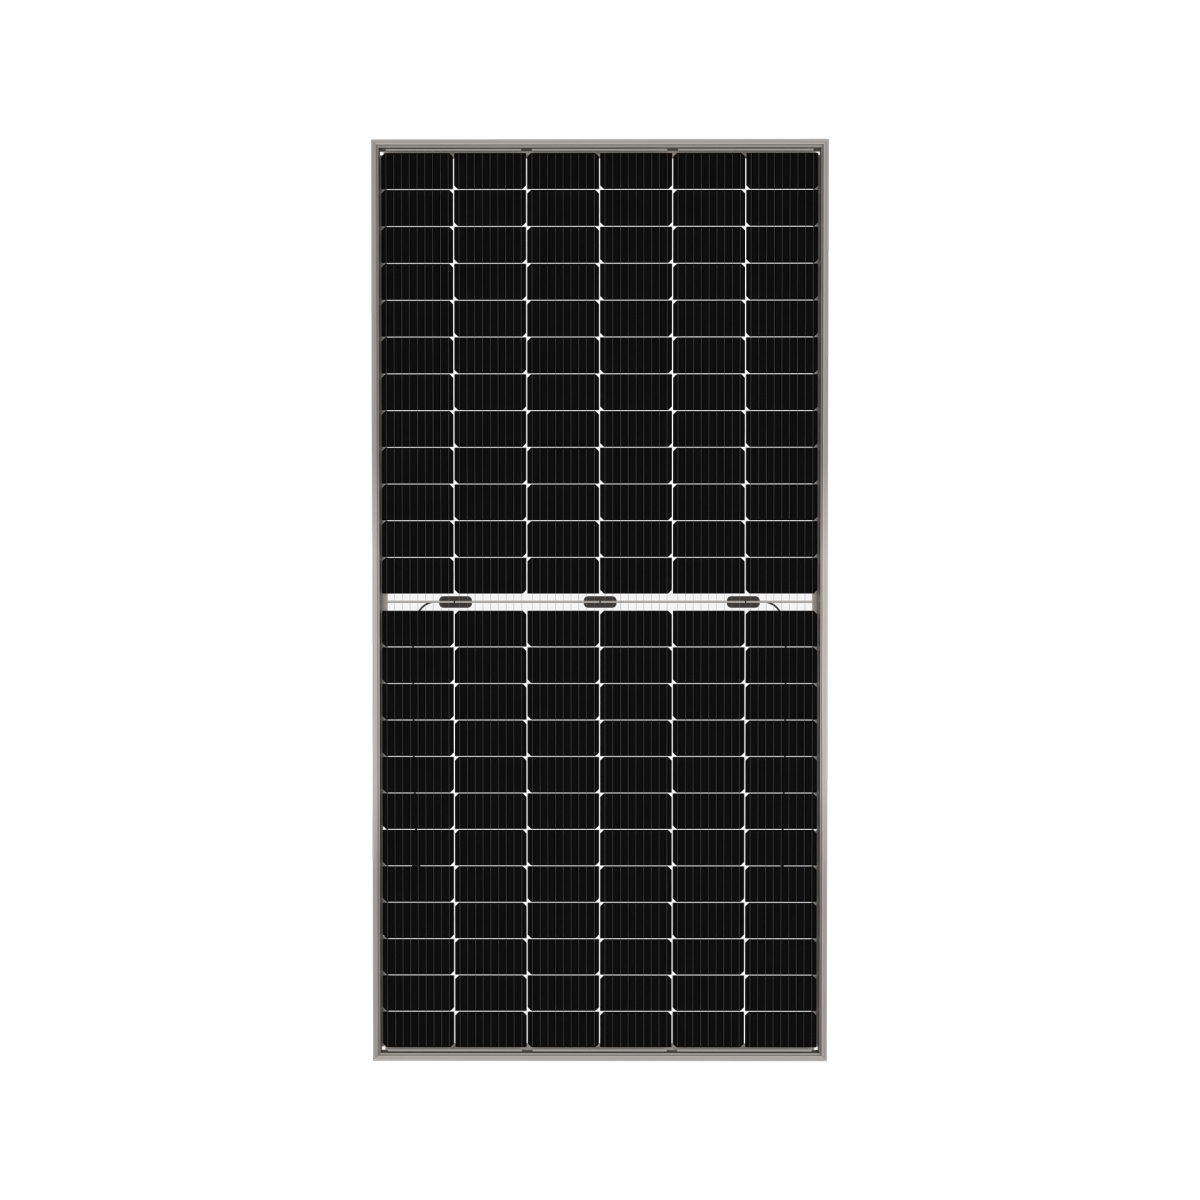 TommaTech 465 Watt 144 Percmono Bifazial Half-Cut Multi Busbar Solarpanel